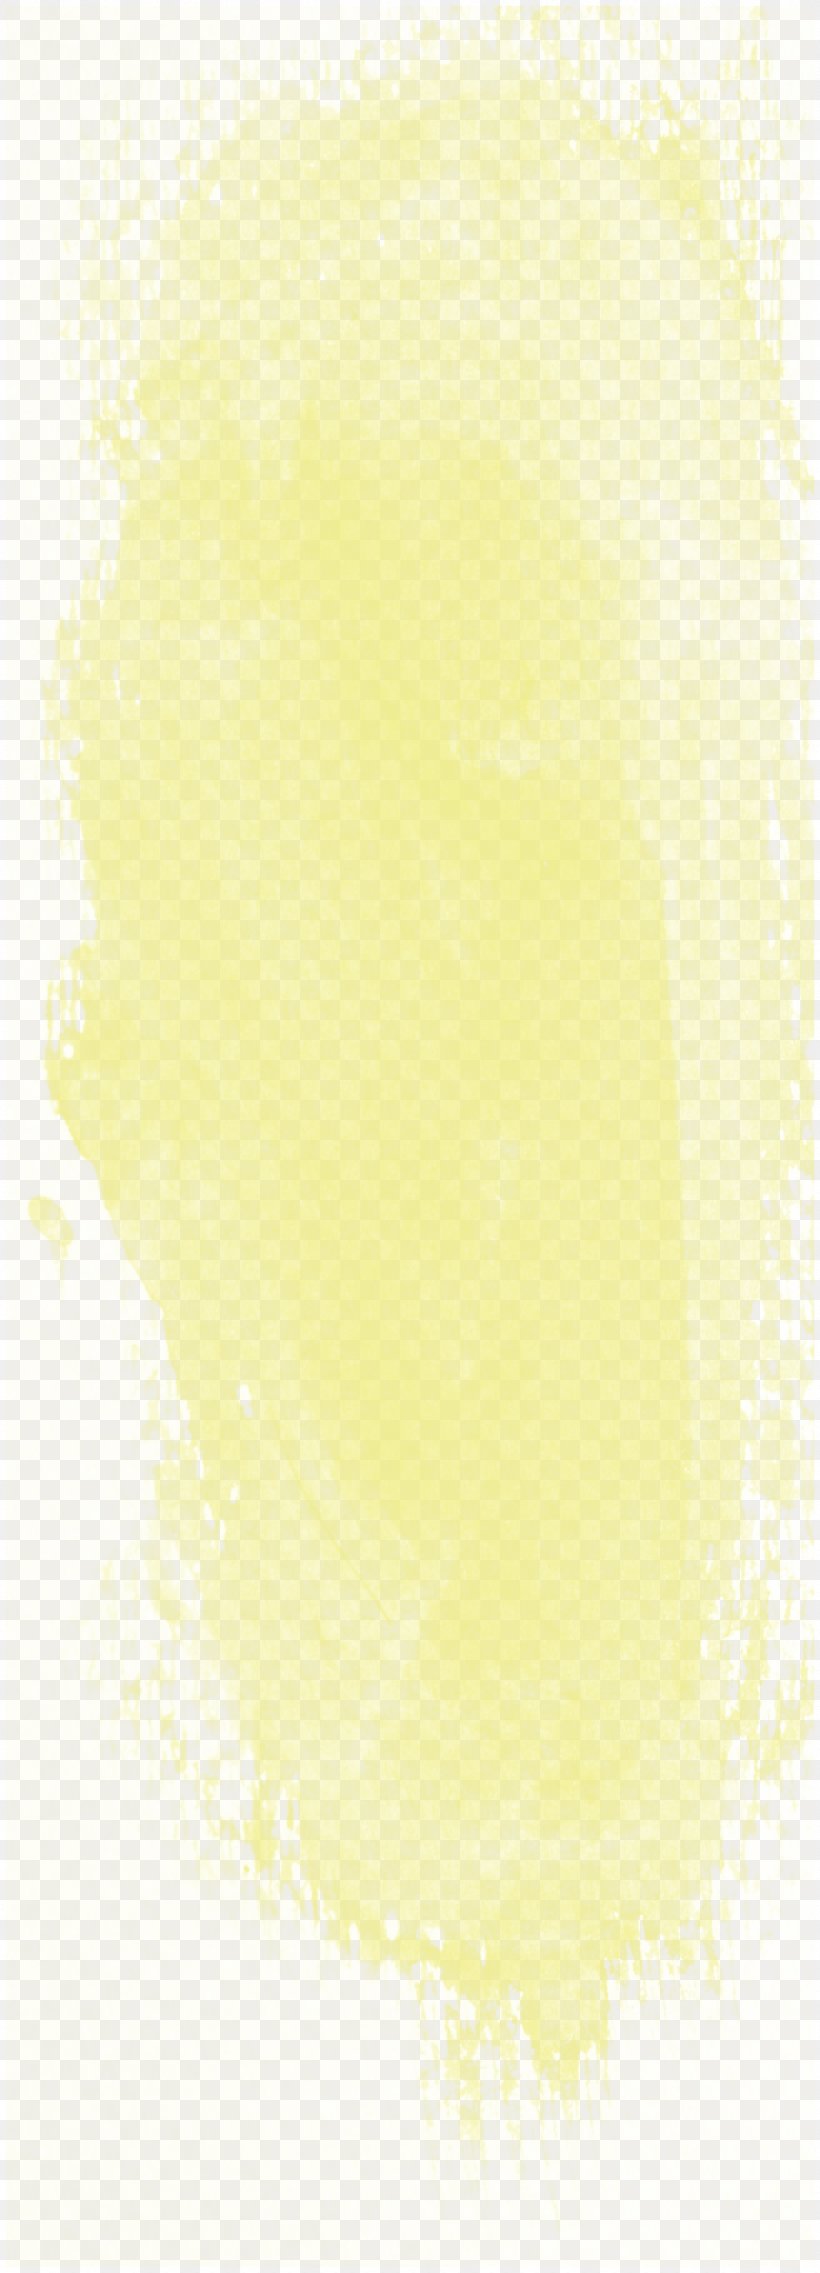 Yellow Desktop Wallpaper Sky Computer Wallpaper, PNG, 873x2420px, Yellow, Computer, Sky, Texture Download Free